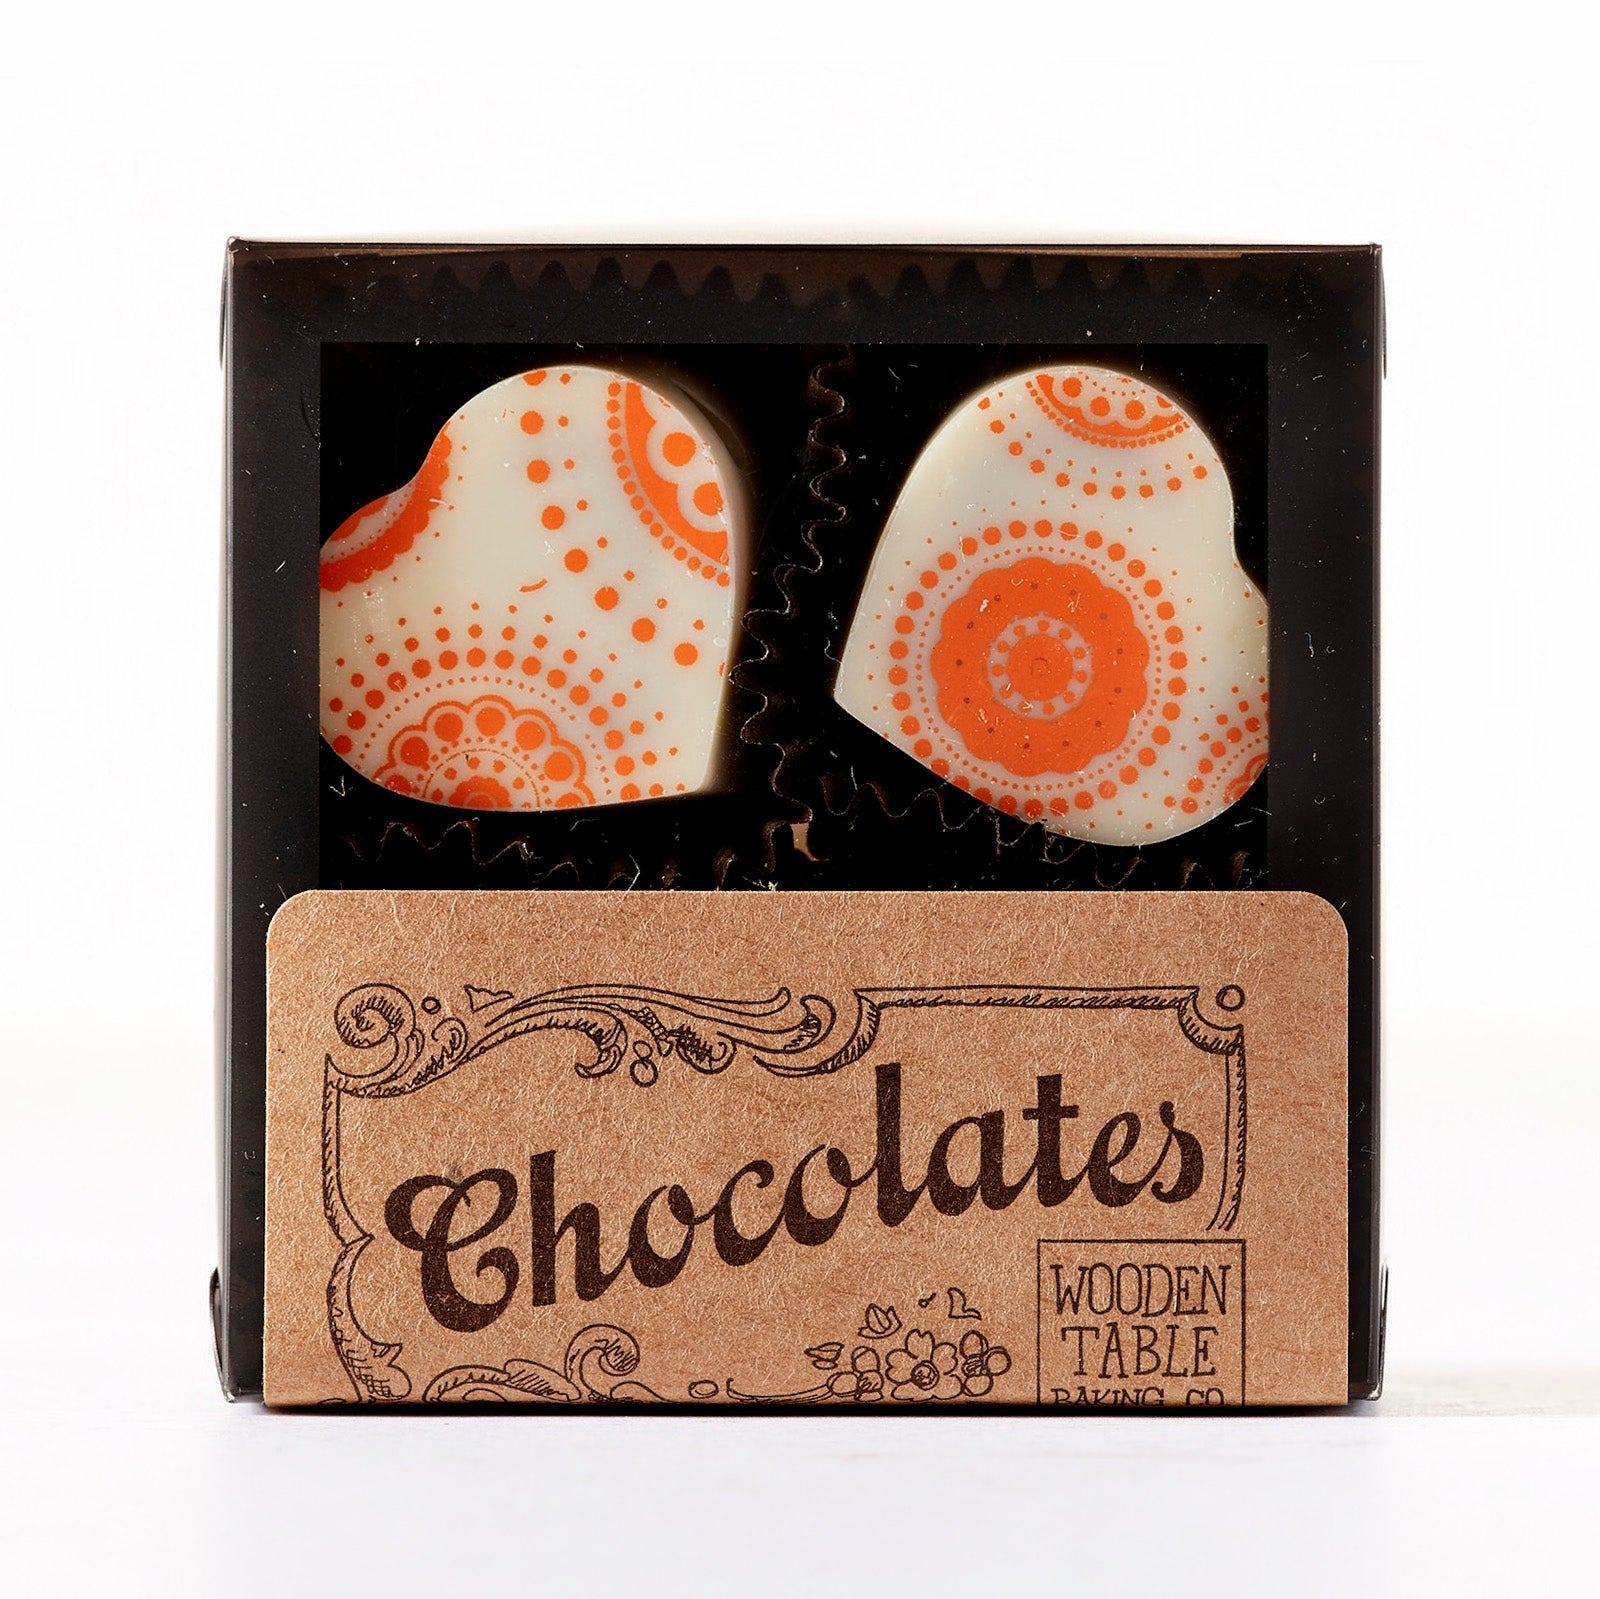 Corazón Bonbons: White Chocolate & Dulce de Leche Wooden Table Baking Co.